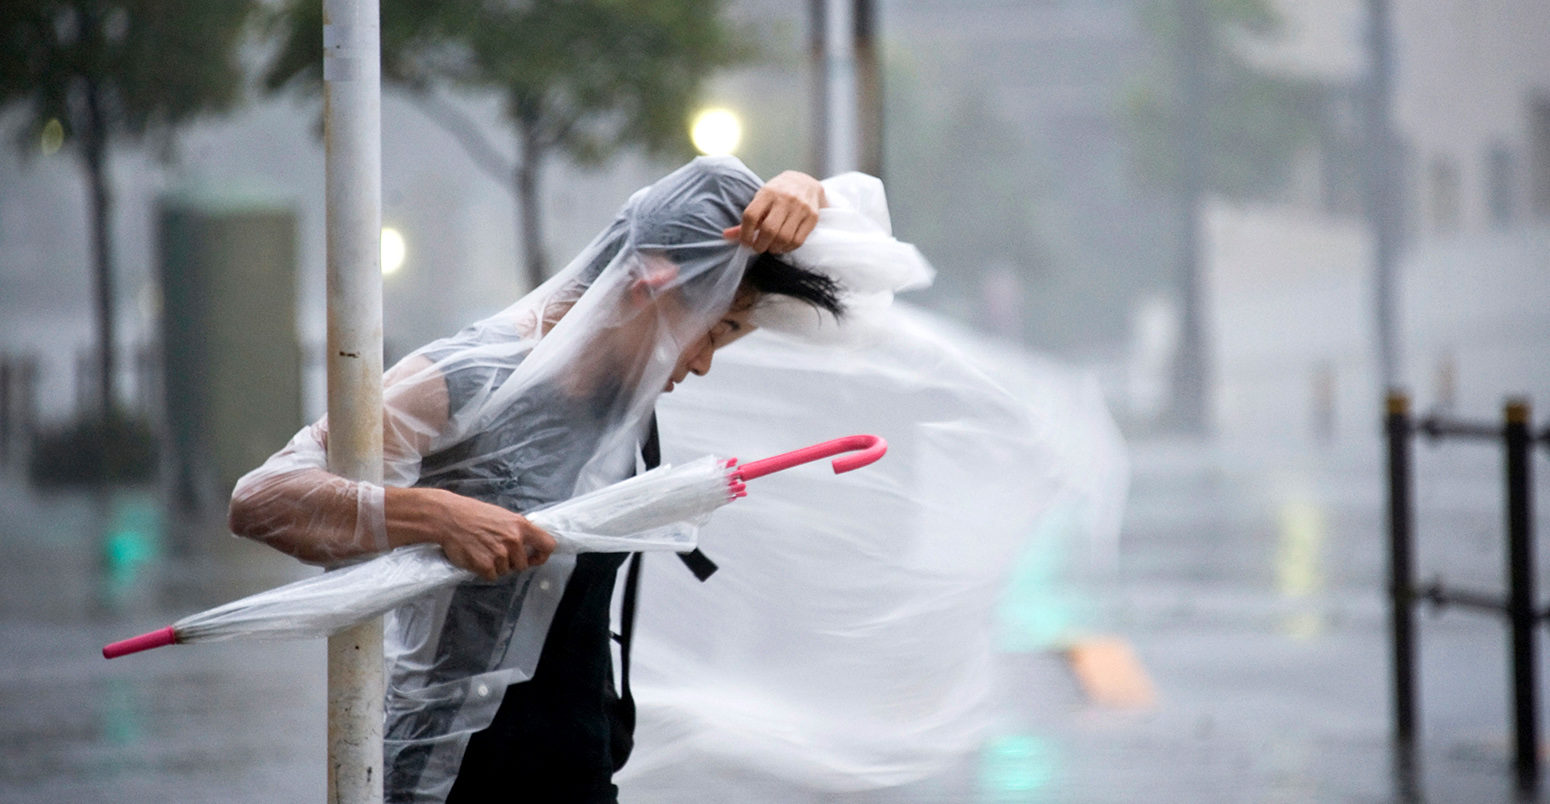 A woman clings on as typhoon Roke blows through Tokyo, Japan, 21 September 2011. Credit: Robert Gilhooly / Alamy Stock Photo. C7G6KM